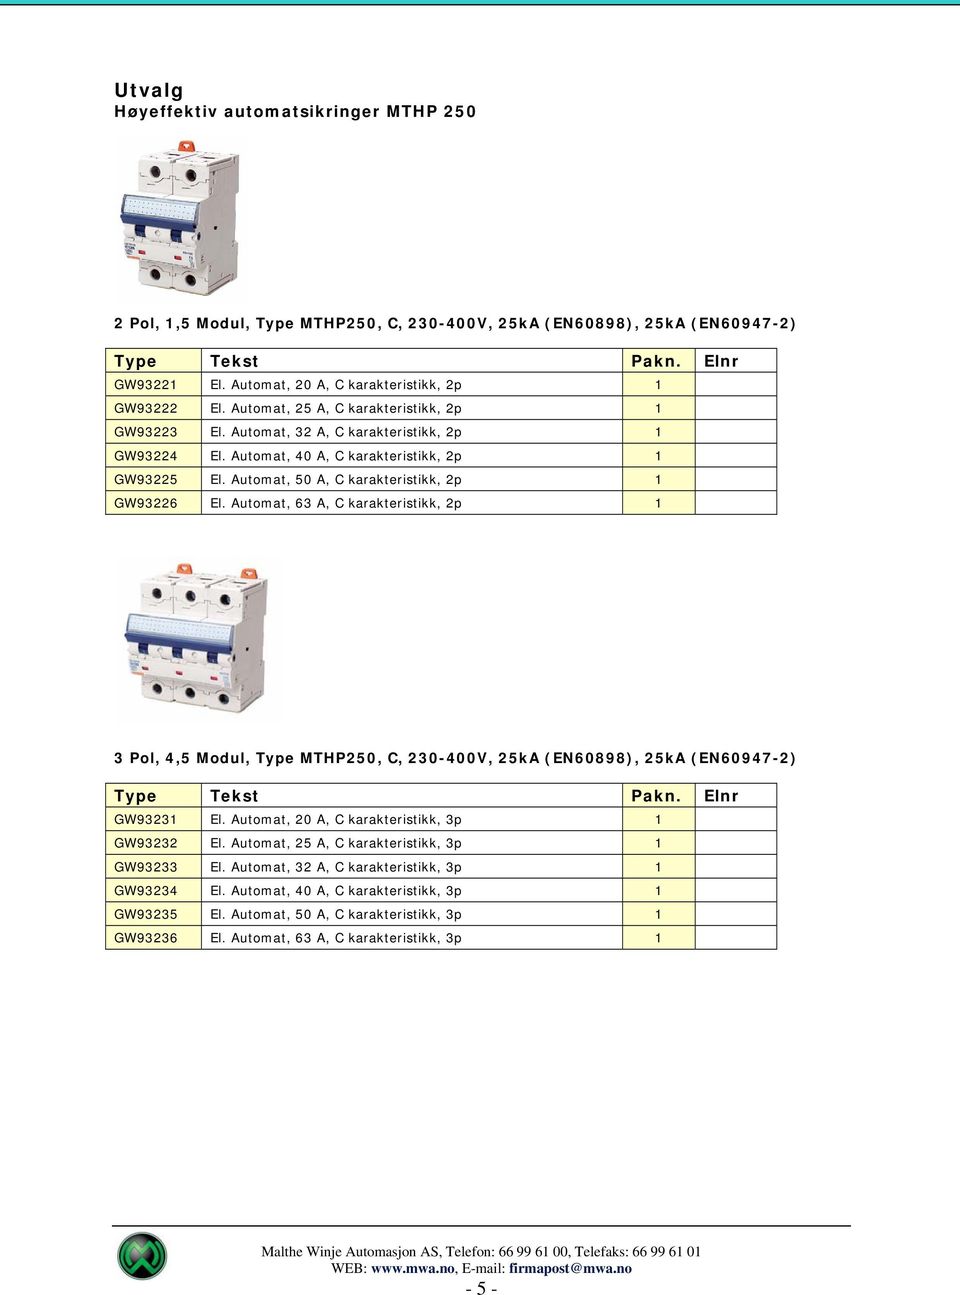 Automat, 63 A, C karakteristikk, 2p 1 3 Pol, 4,5 Modul, Type MTHP250, C, 230-400V, 25kA (EN60898), 25kA (EN60947-2) GW93231 El. Automat, 20 A, C karakteristikk, 3p 1 GW93232 El.